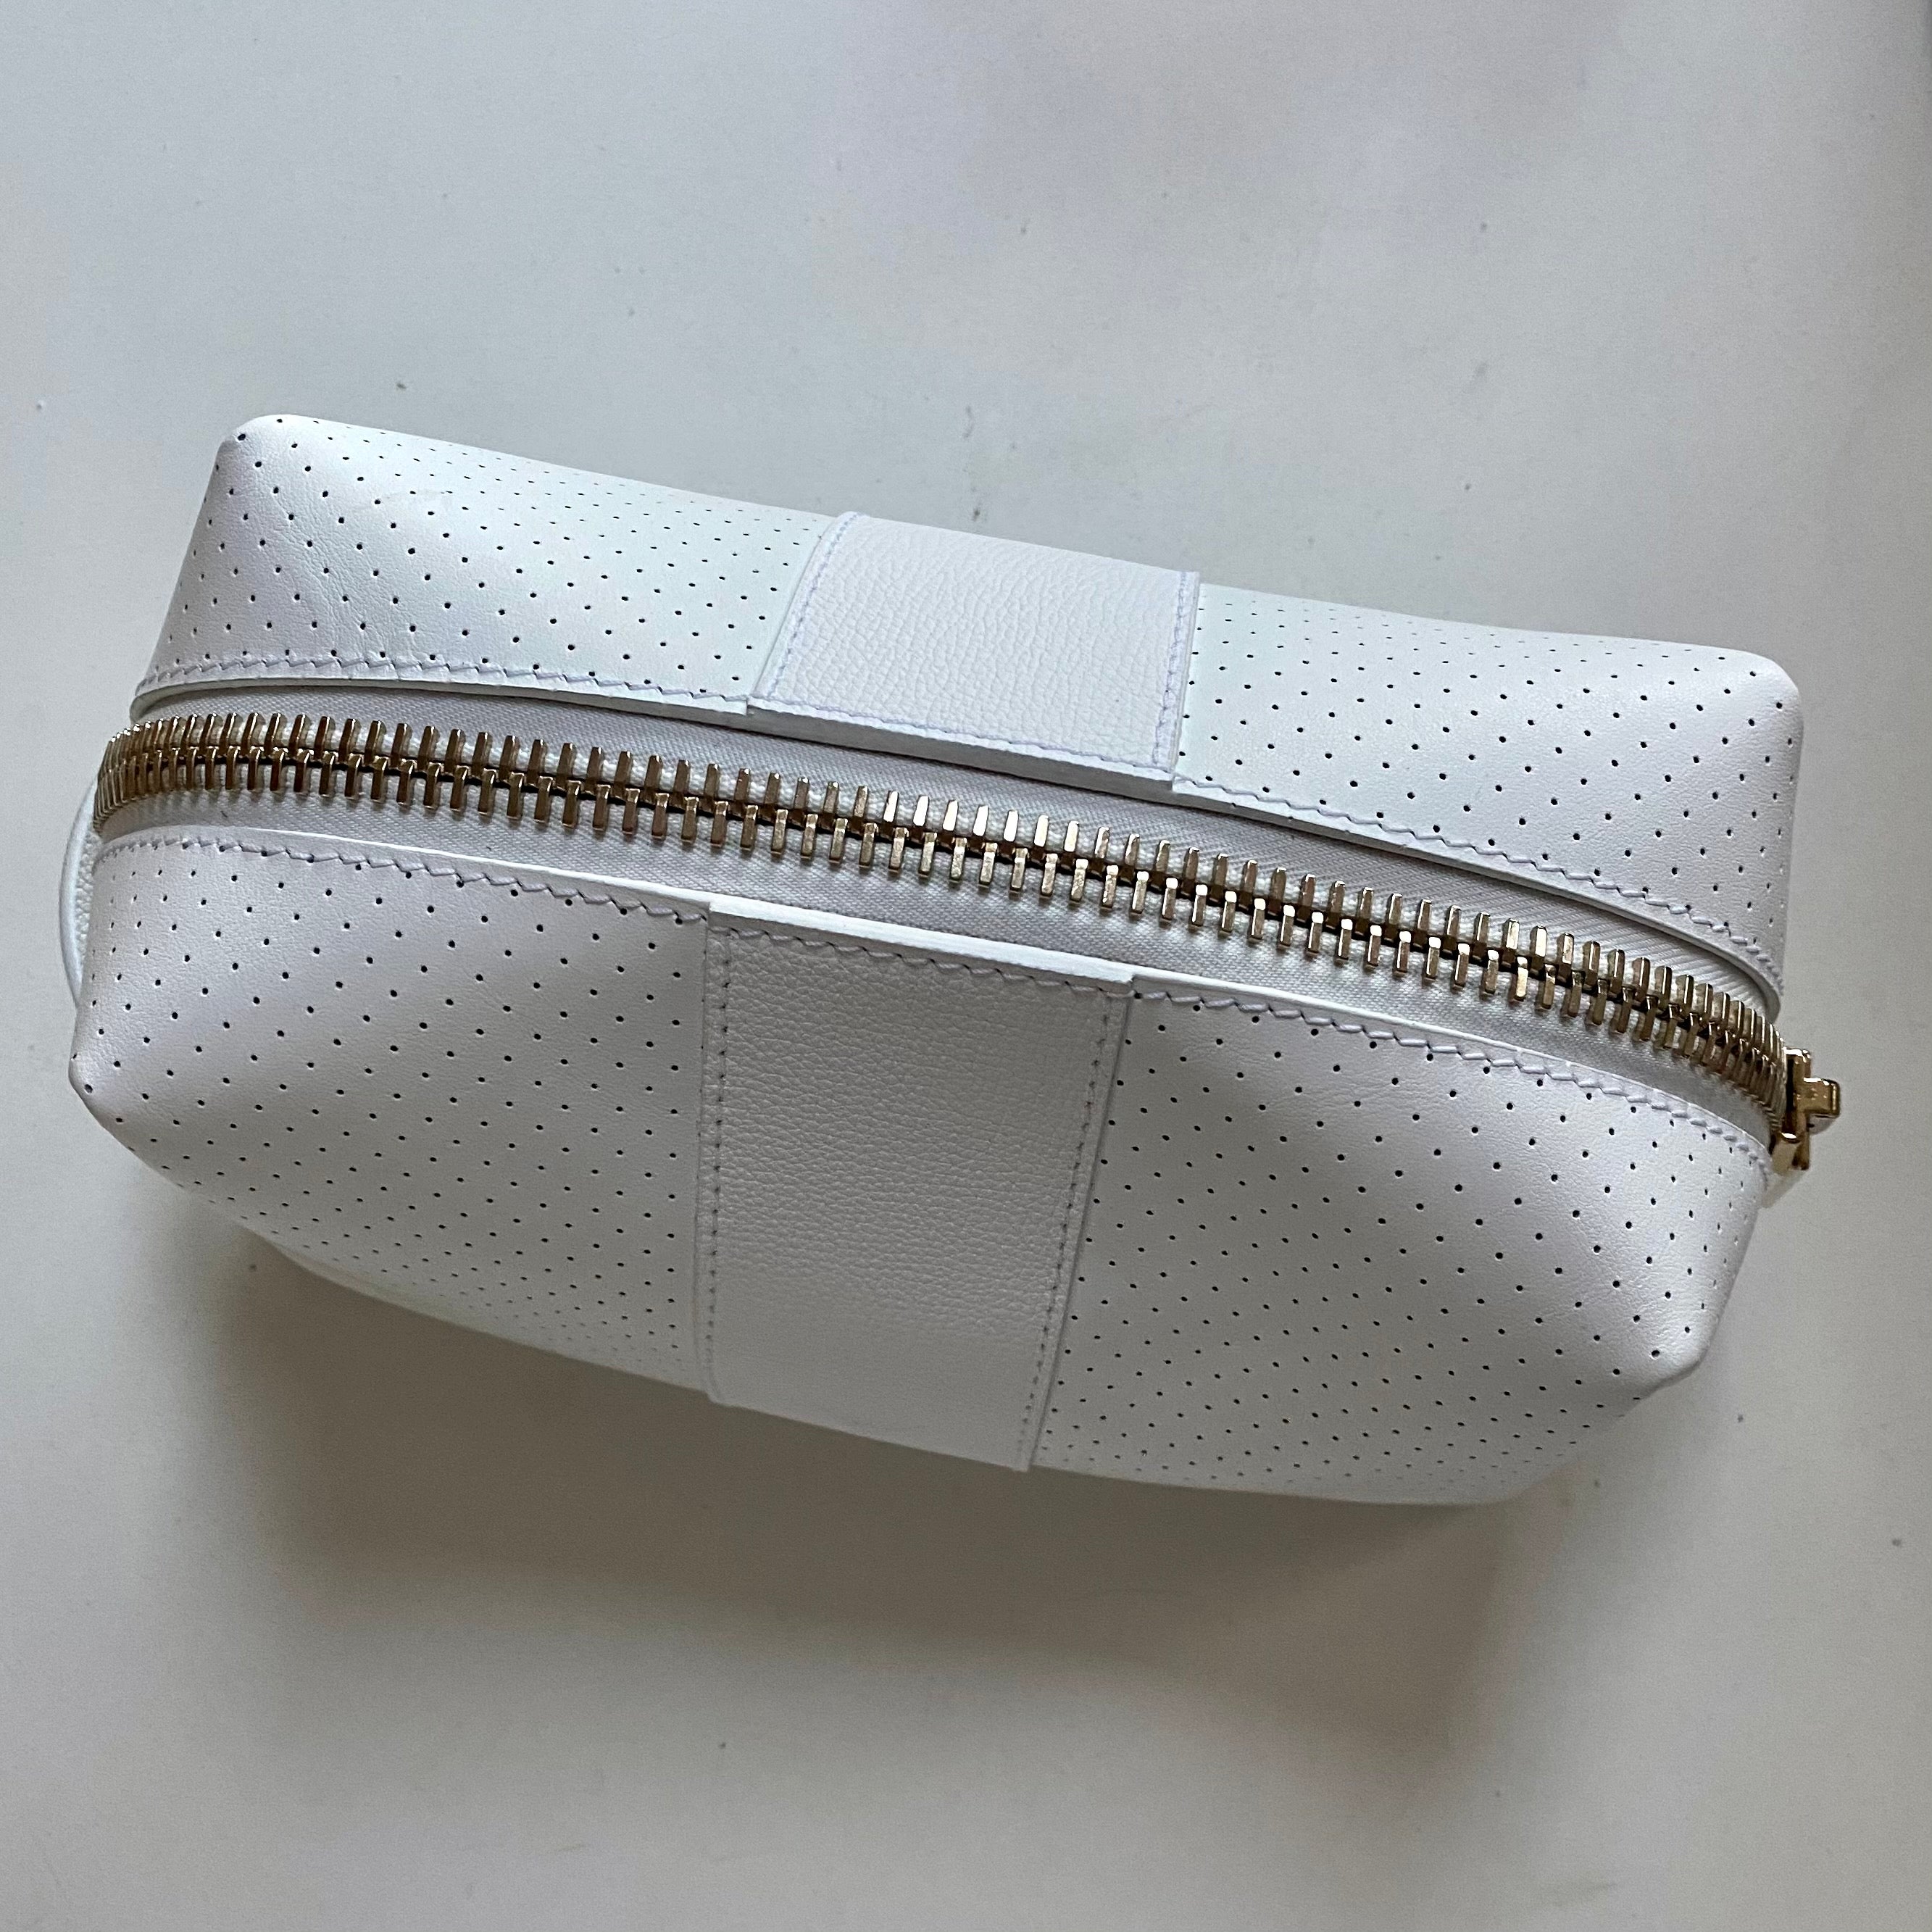 24/7 Bag - White Leather/Gold Zipper